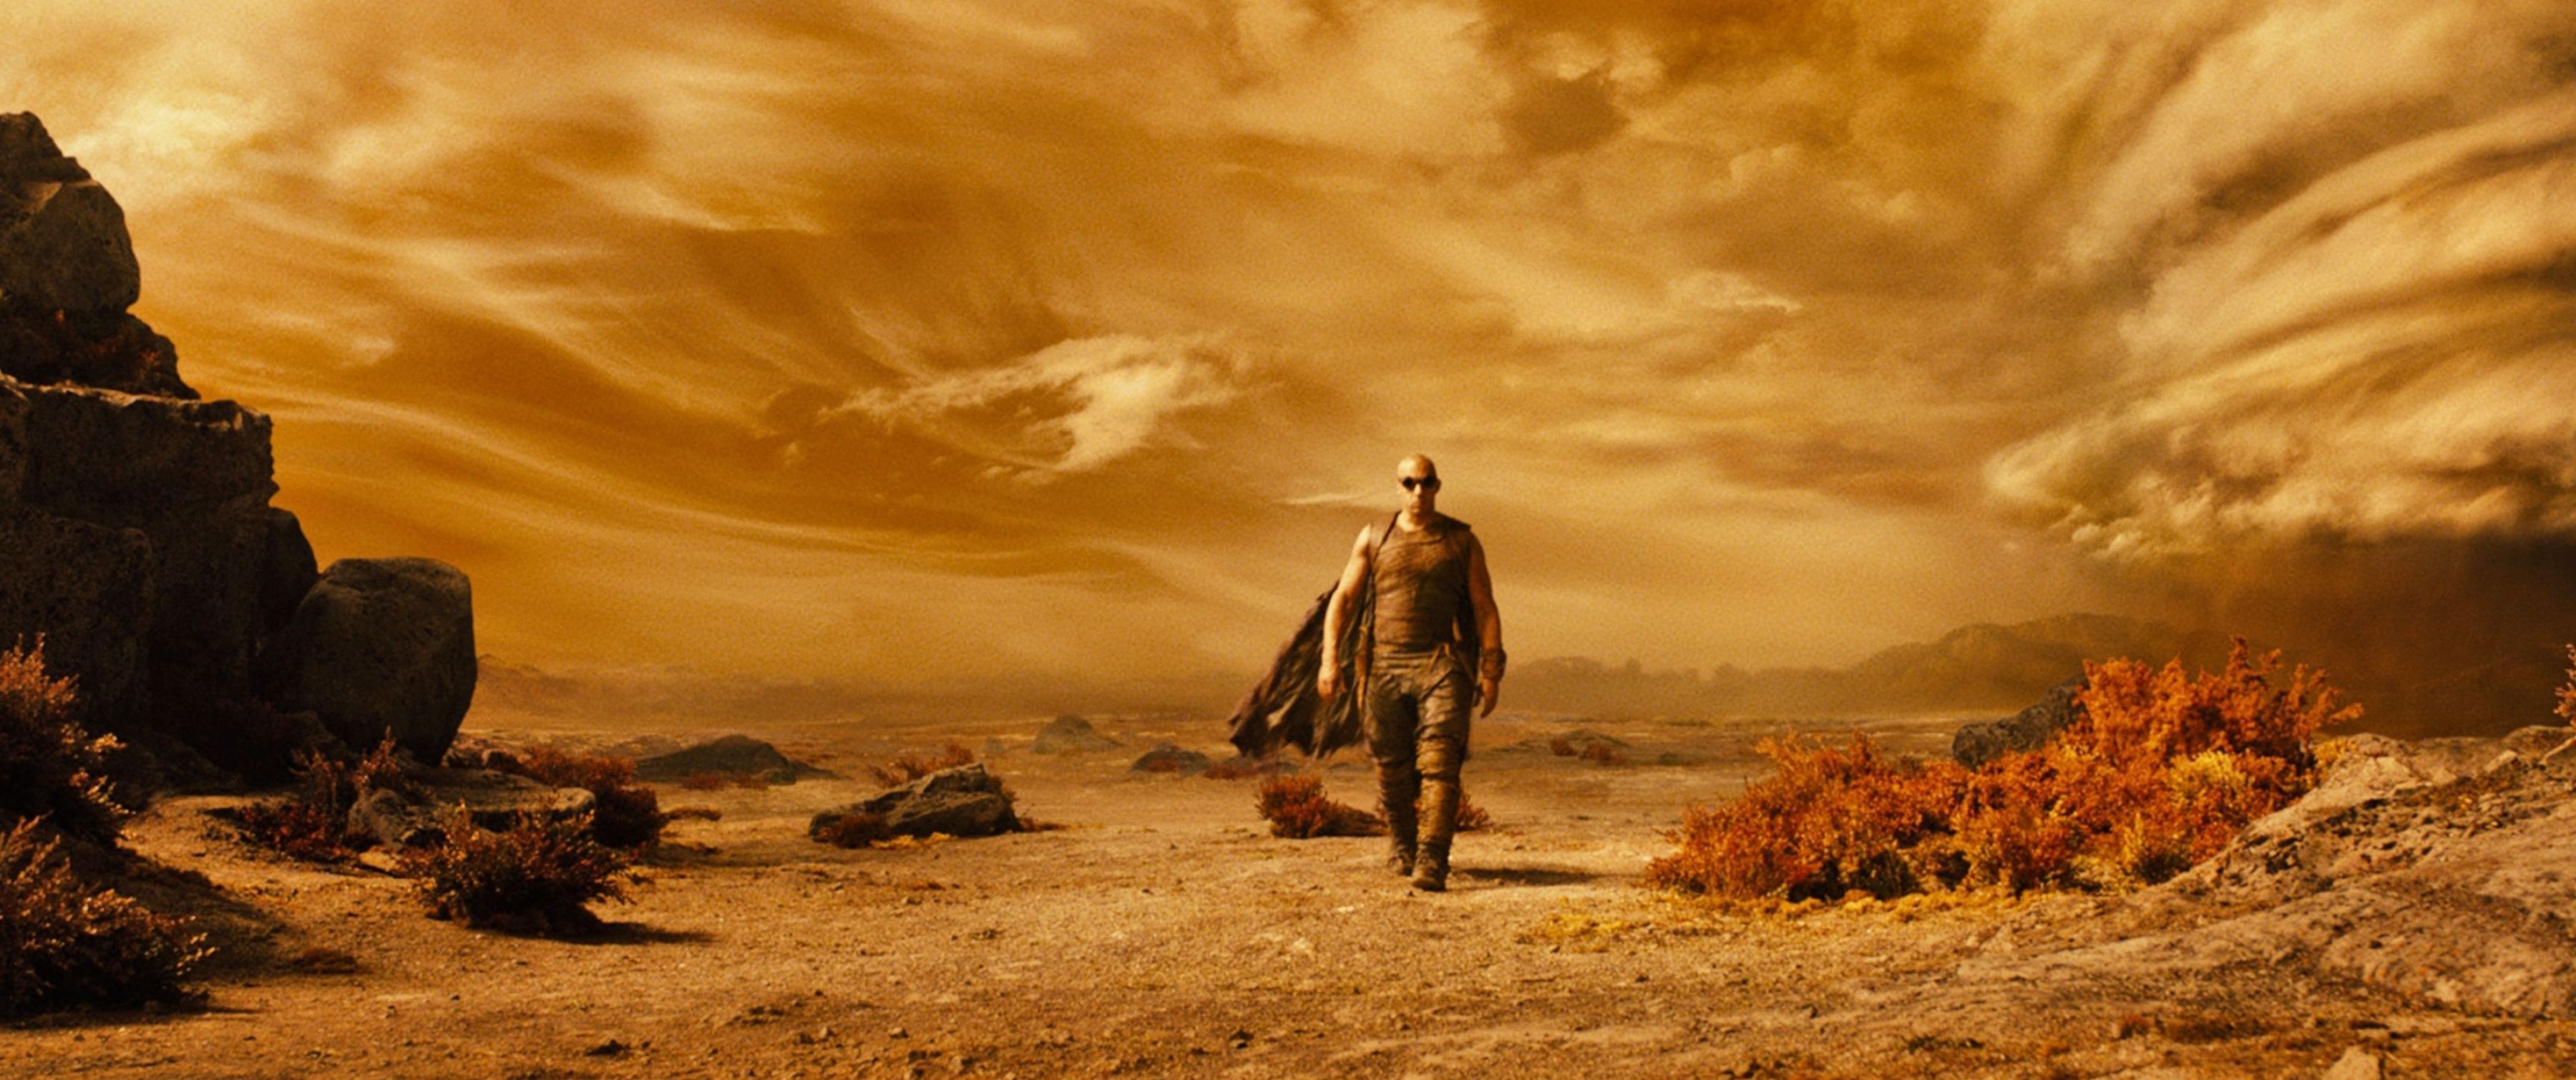 Riddick, trailer poster, movie images, 3600x1510 Dual Screen Desktop